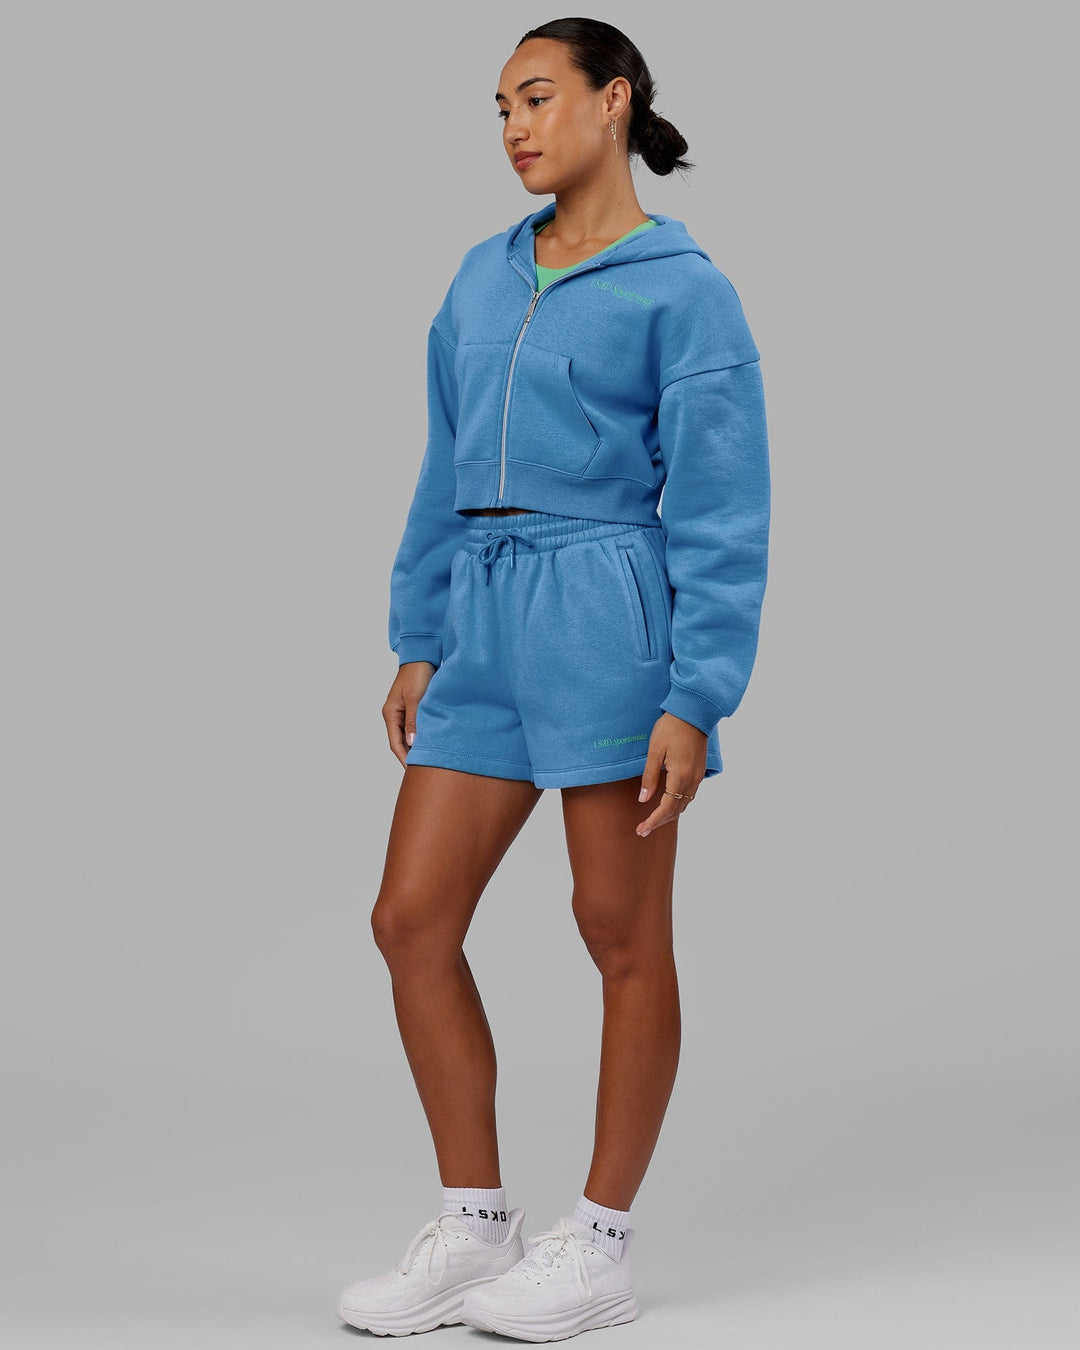 Woman wearing Motion Lounge Shorts - Azure Blue